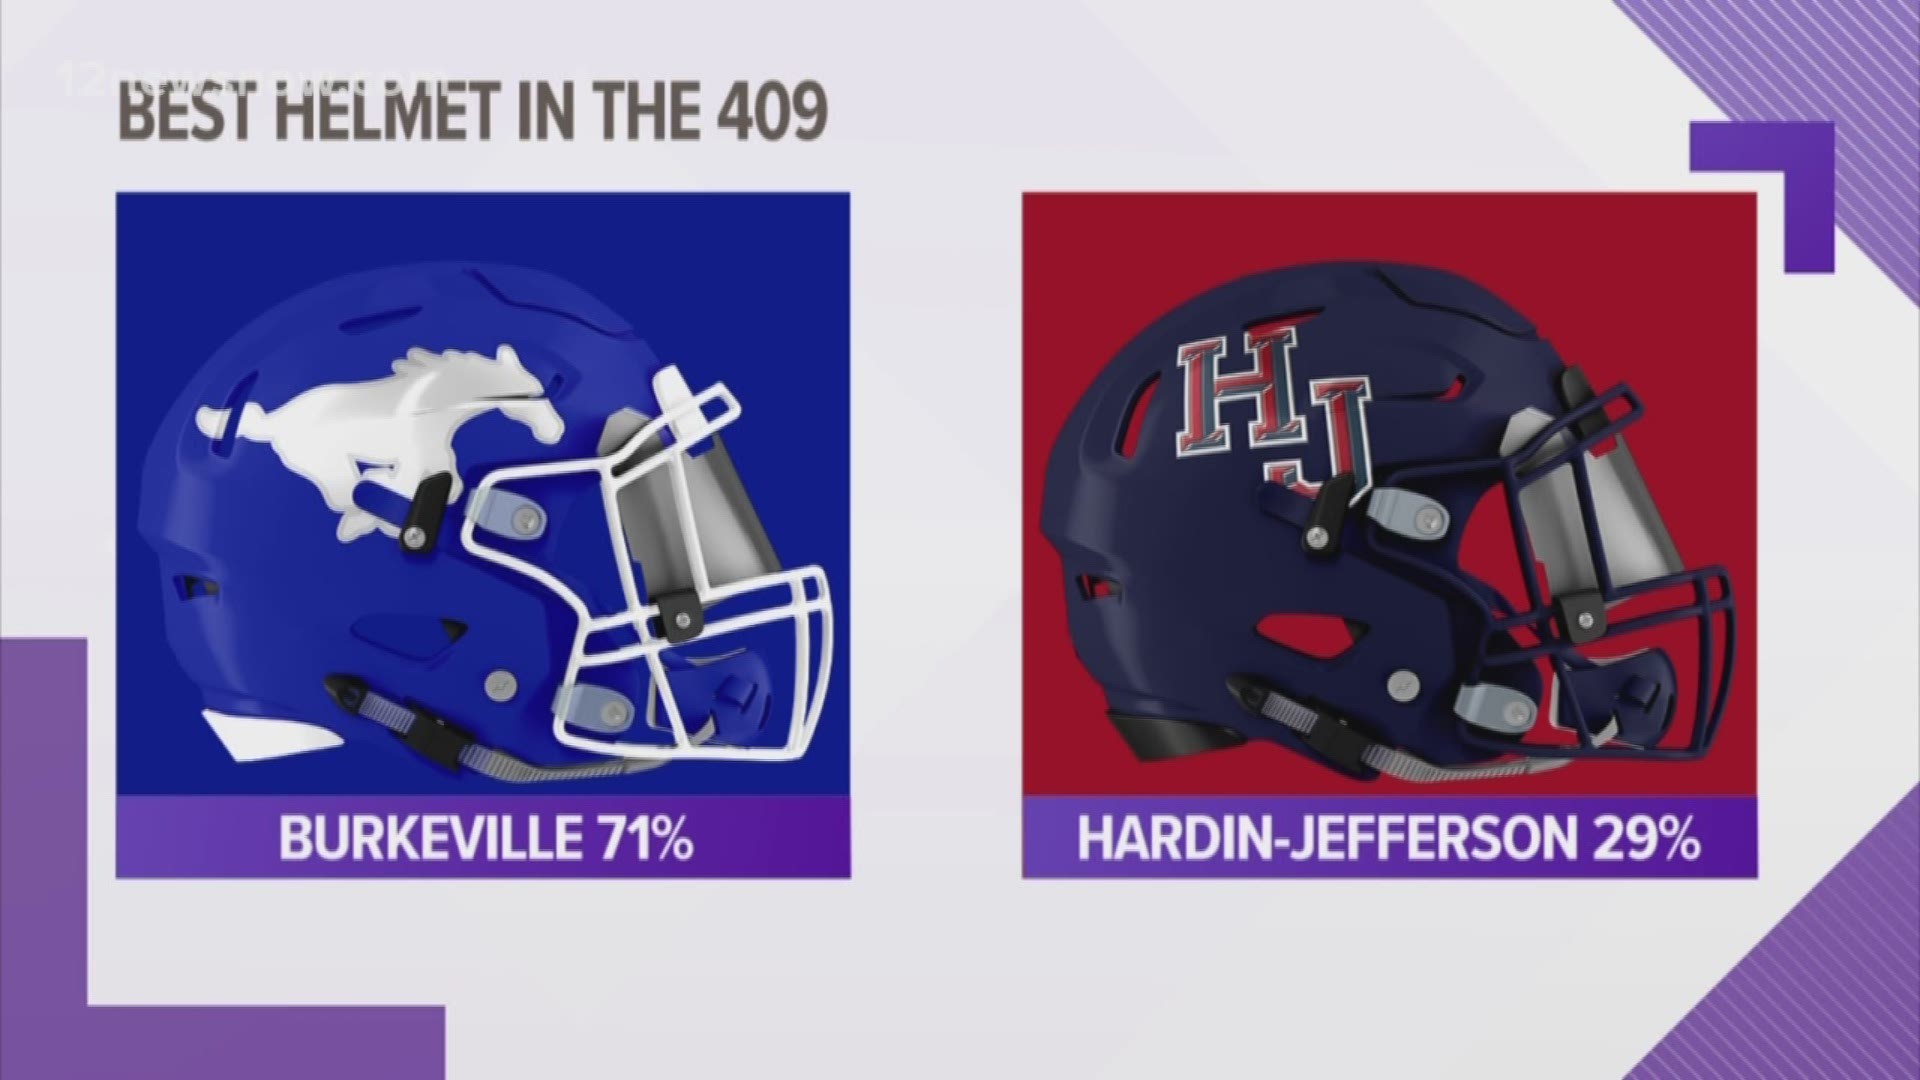 Burkeville marches past Hardin-Jefferson in the Best Helmet in the 409 Bracket